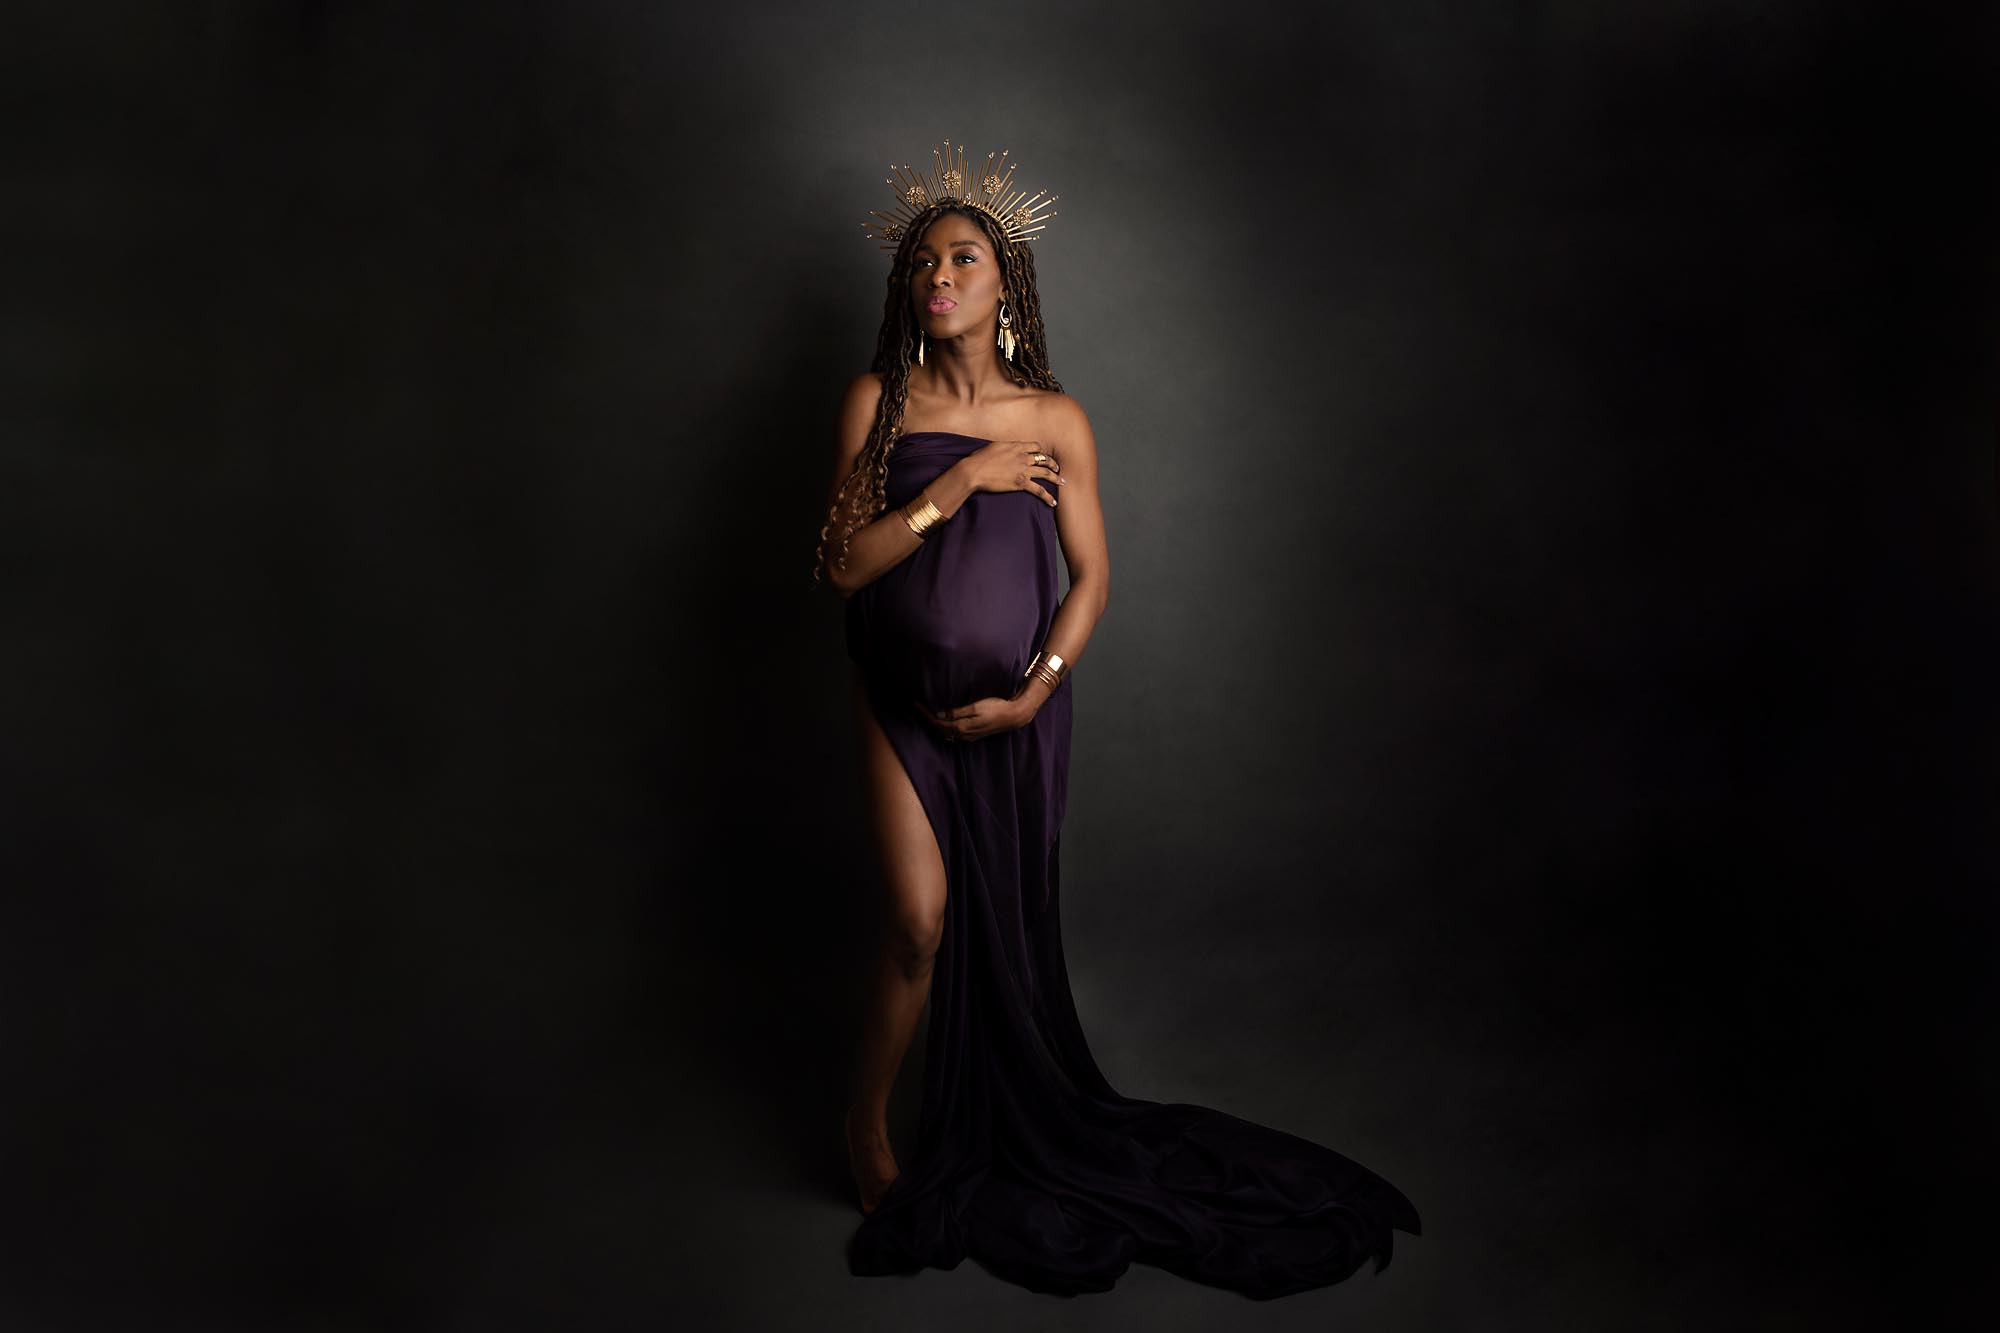 maternity portrait taken by newborn photogrpahy manchester